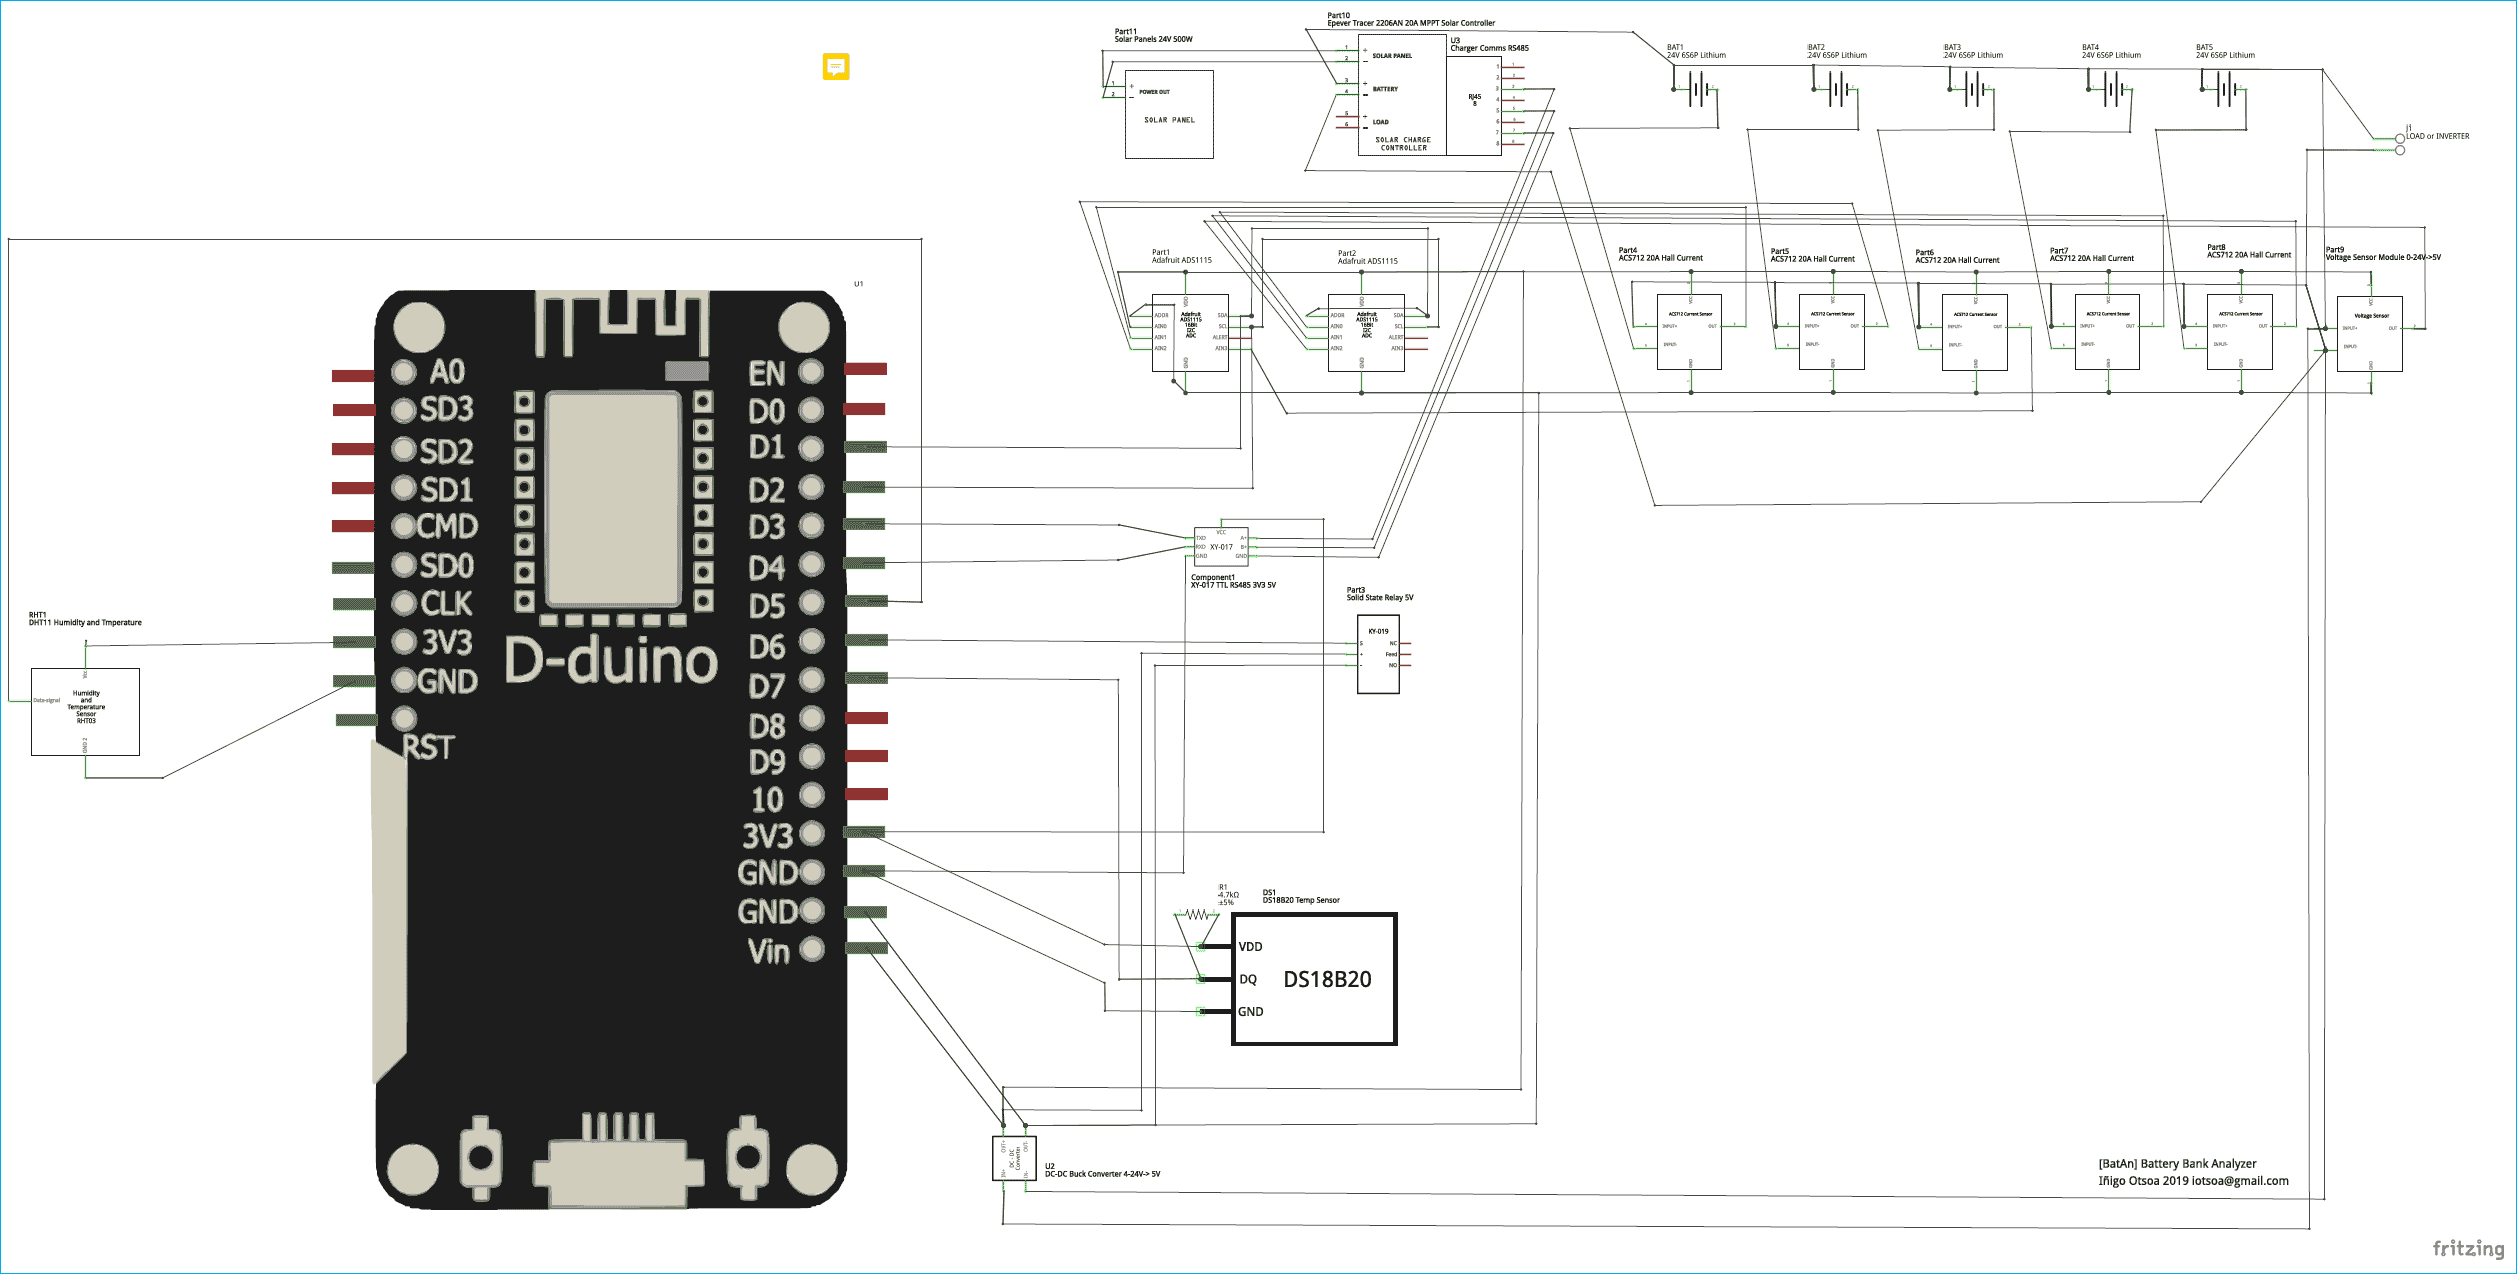 Circuit Diagram of IoT based Lithium Battery Monitoring System using ESP8266